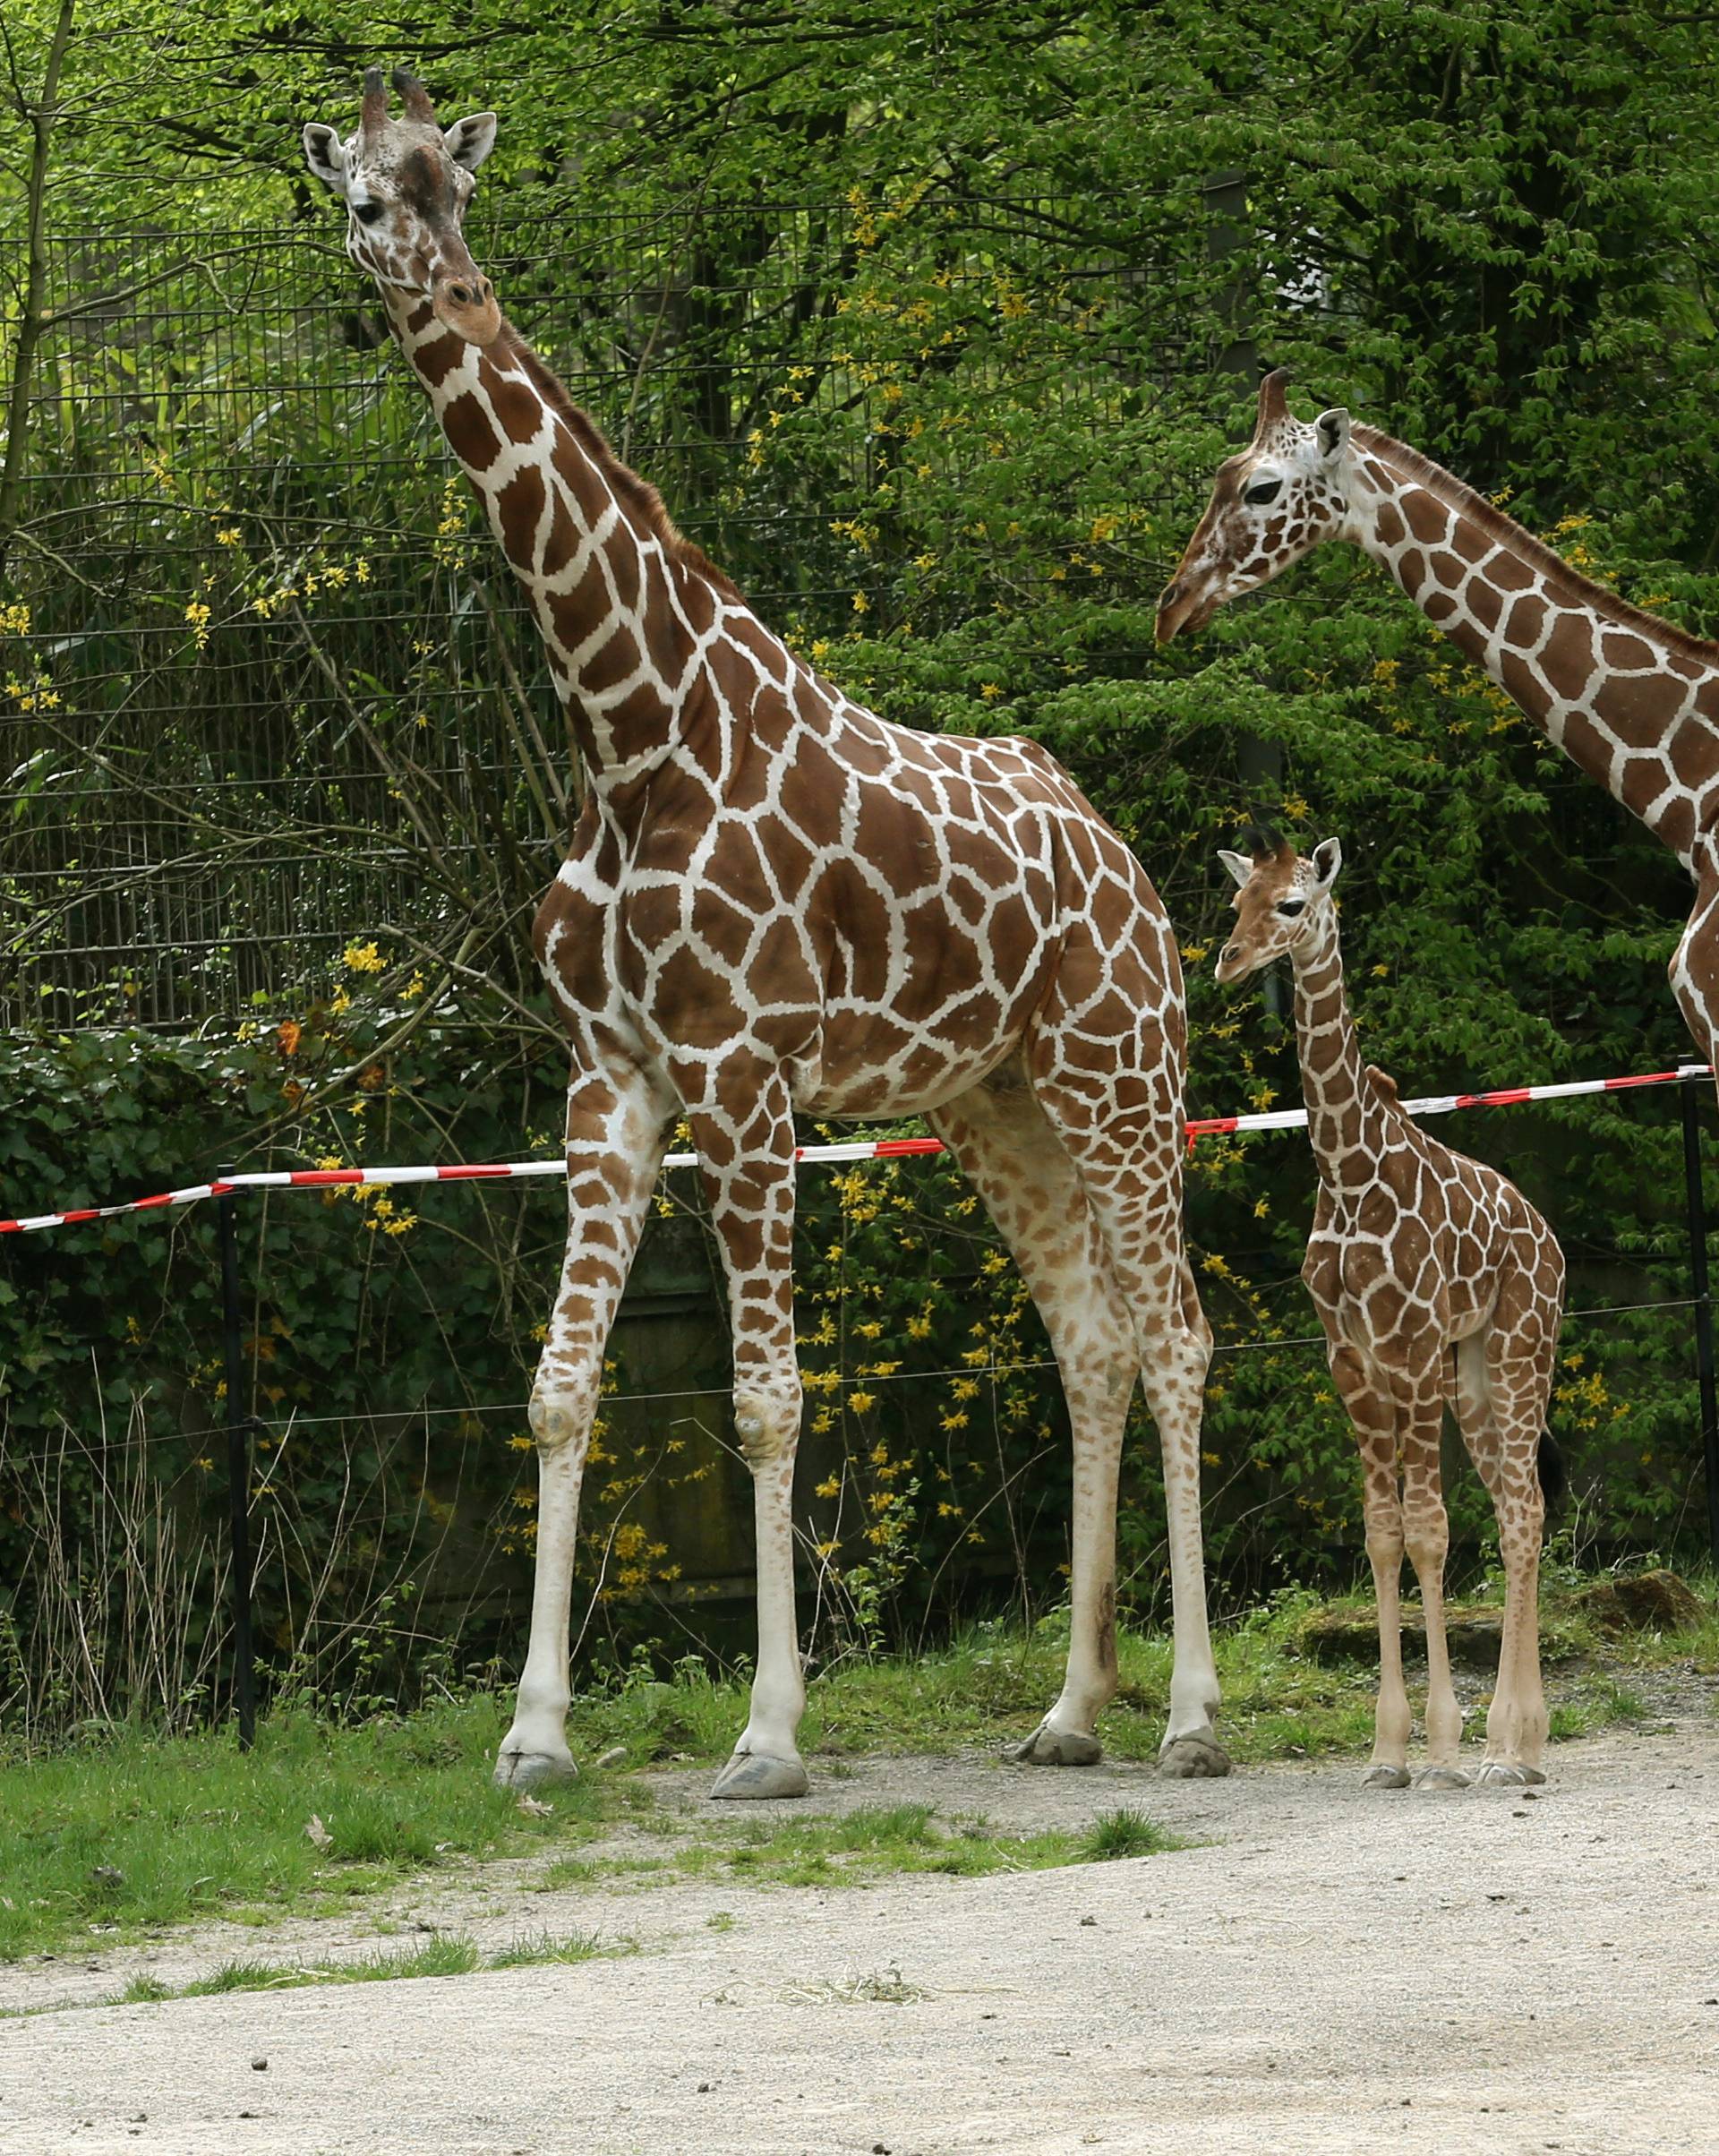 Baby giraffe in Duisburg zoo